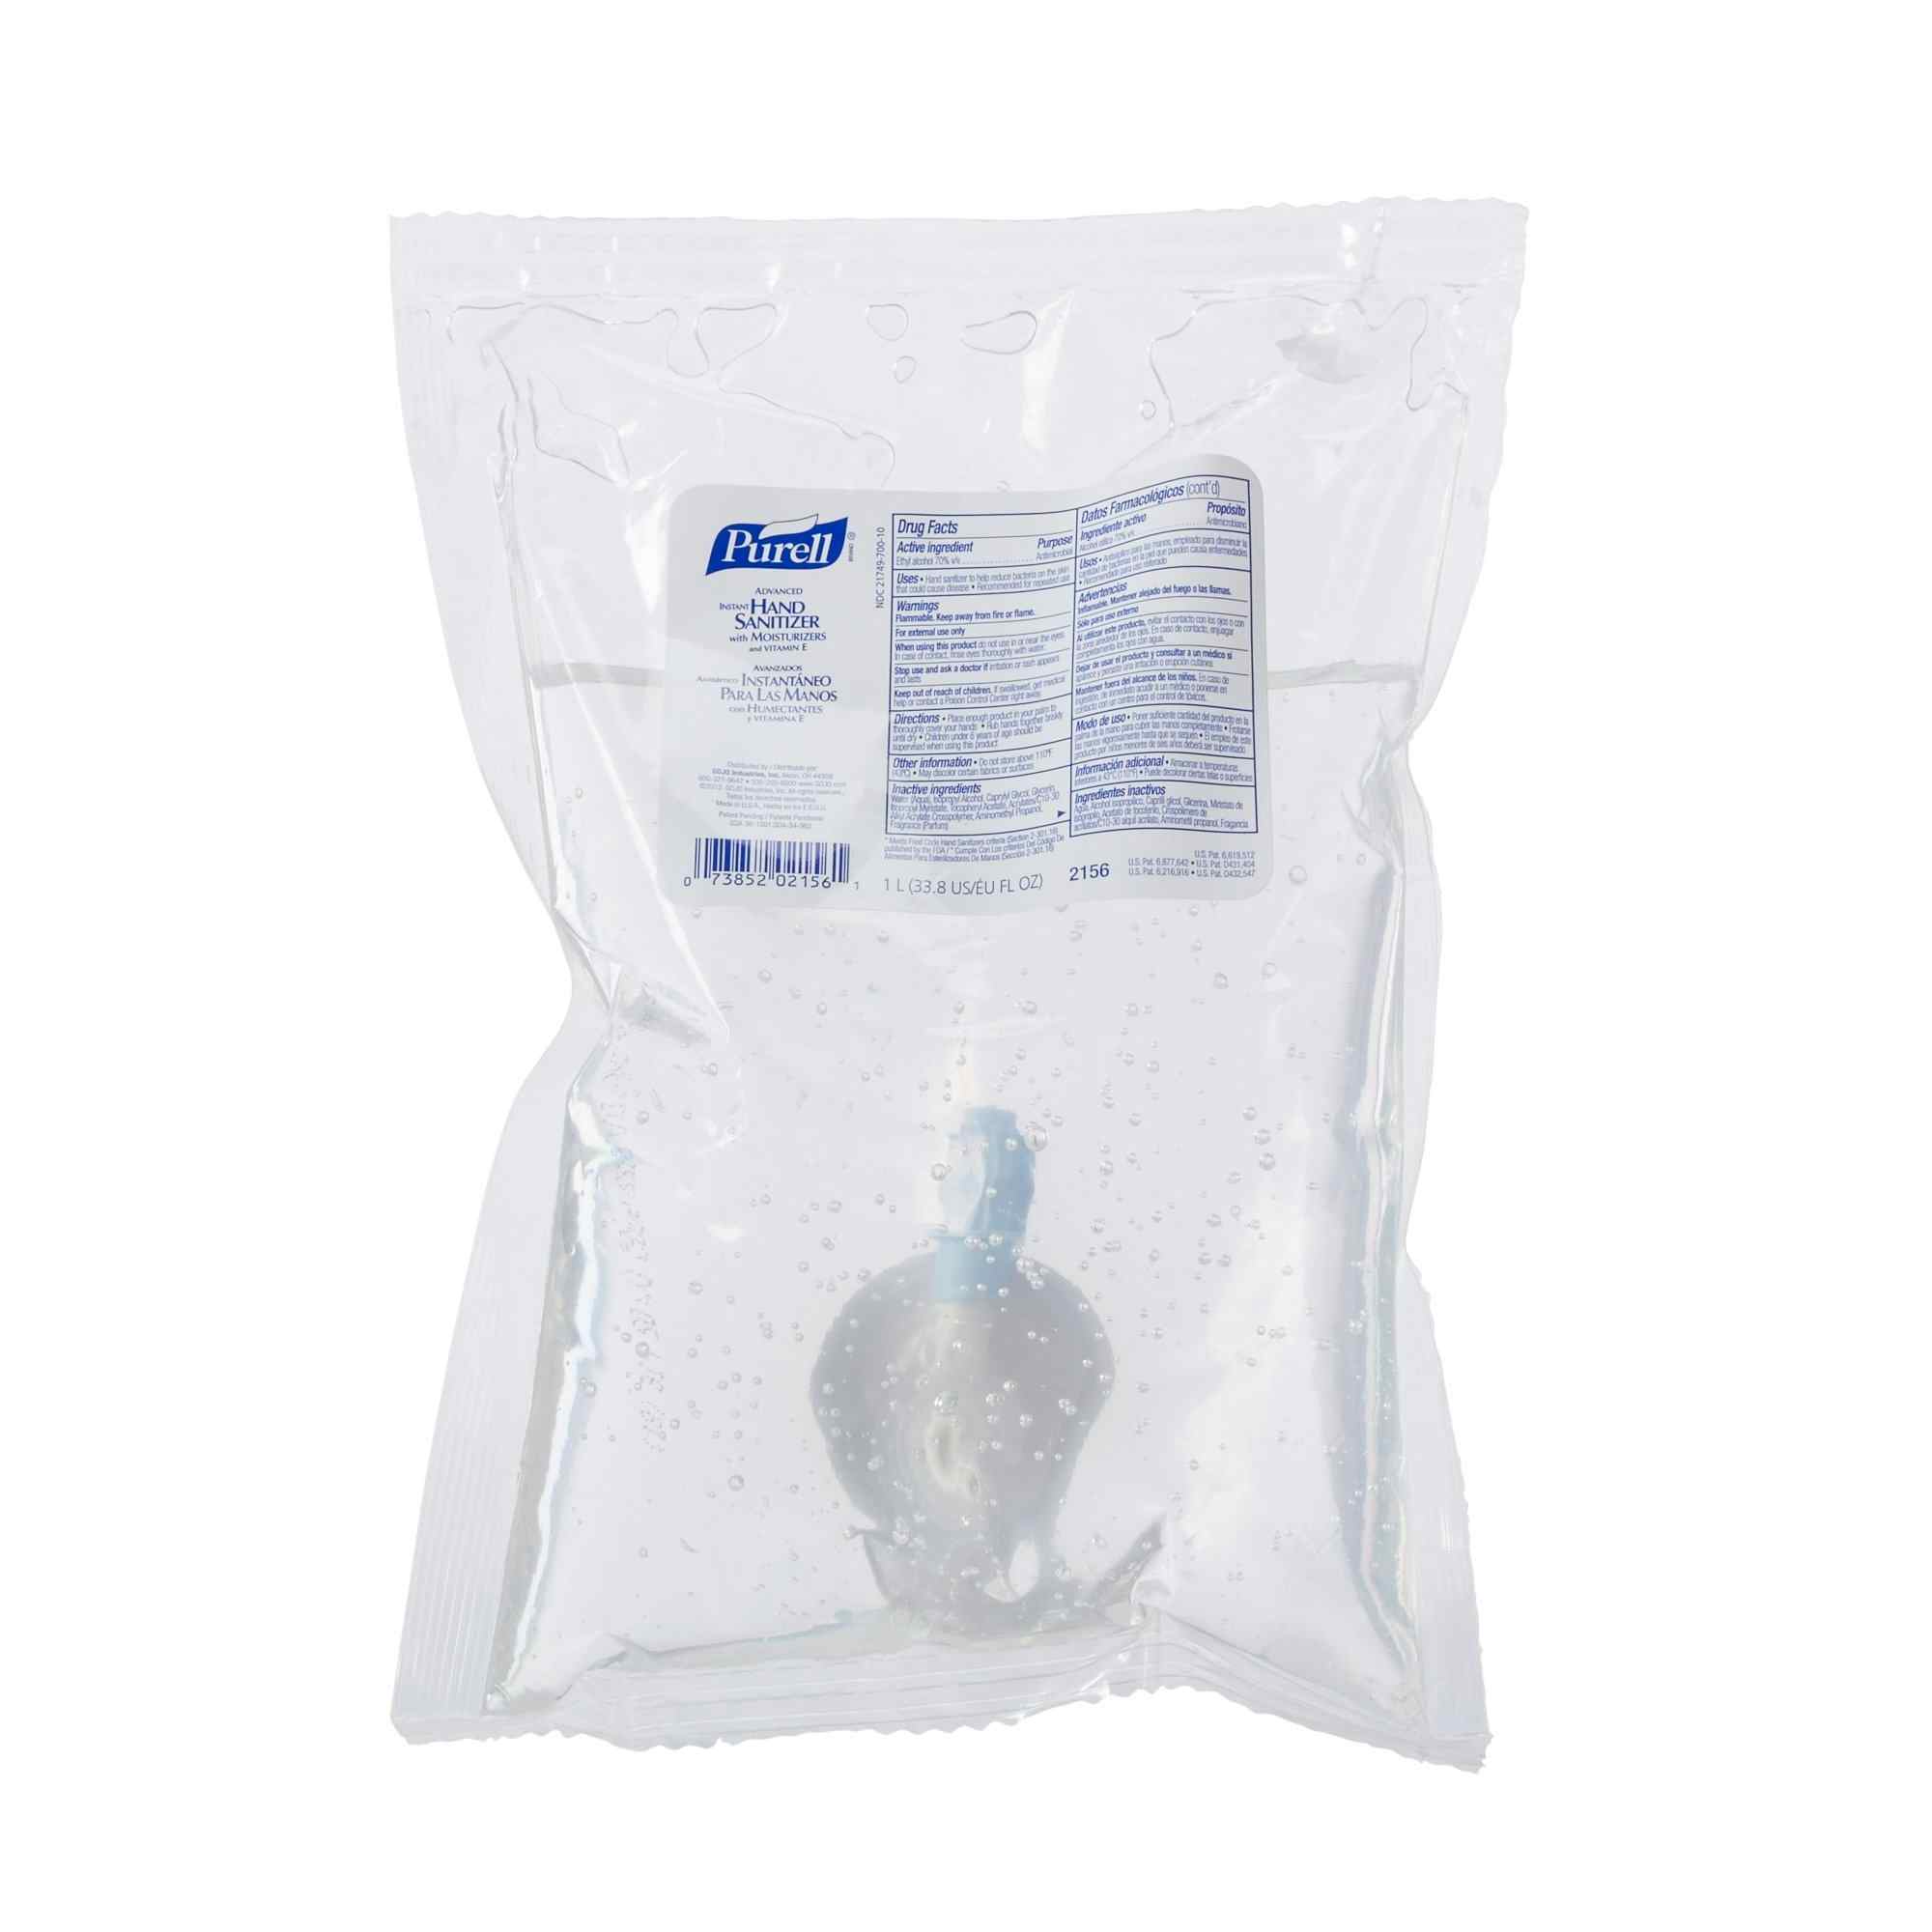 Purell Advanced Gel Hand Sanitizer Refill, 2156-08, 1,000 mL Bag - Case of 8